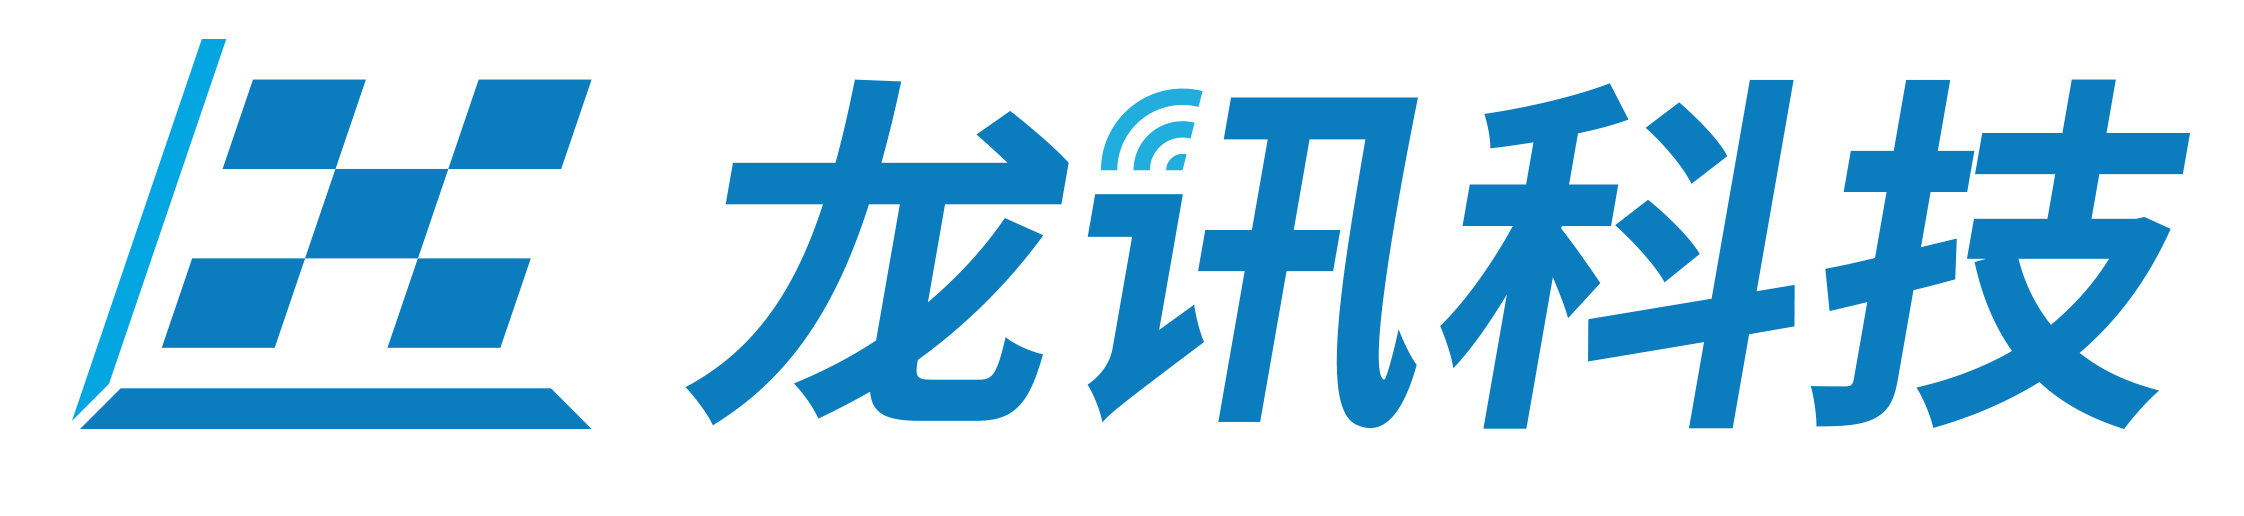 Jilin Longxun Technology Co., Ltd